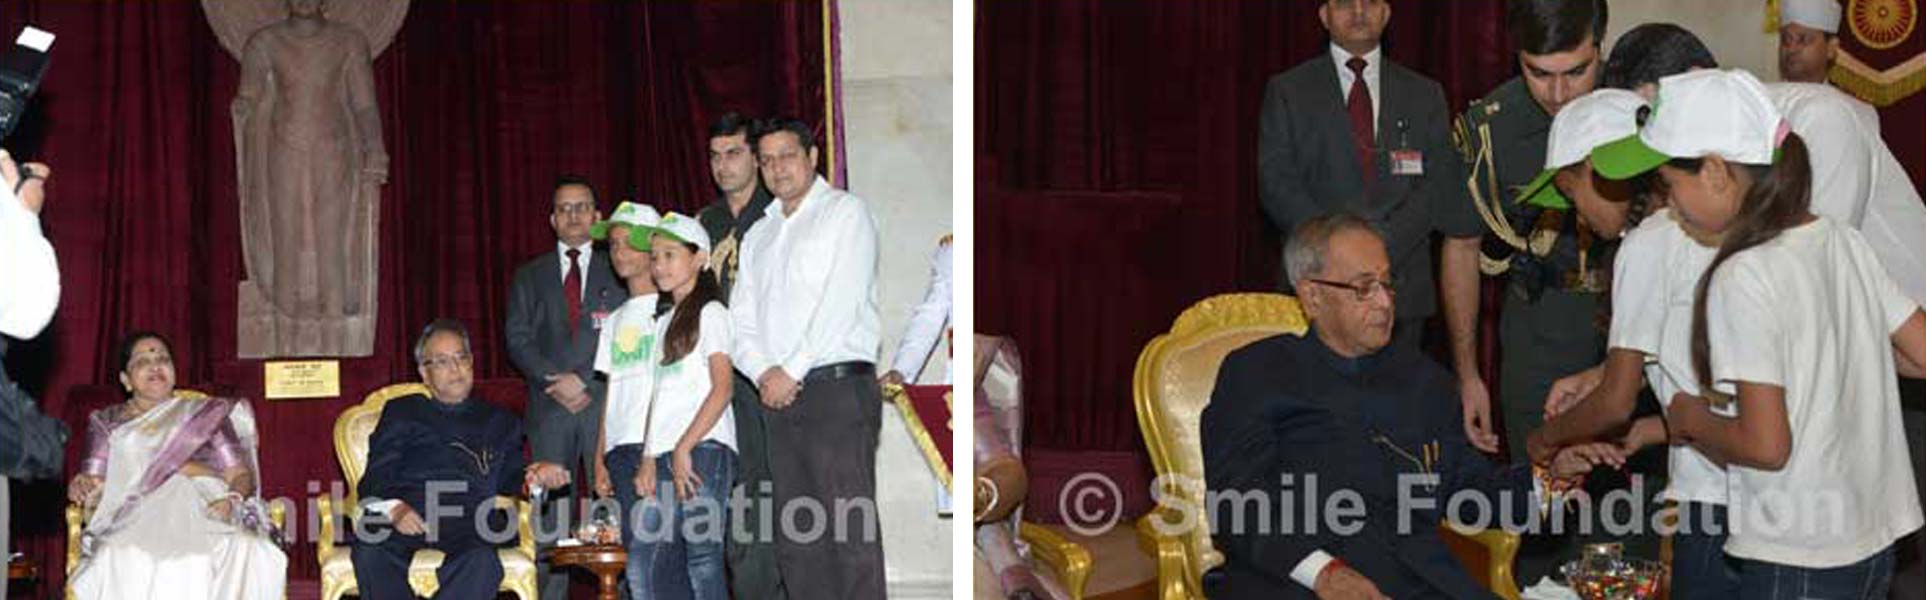 Smile kids tie Rakhi on the President's wrist